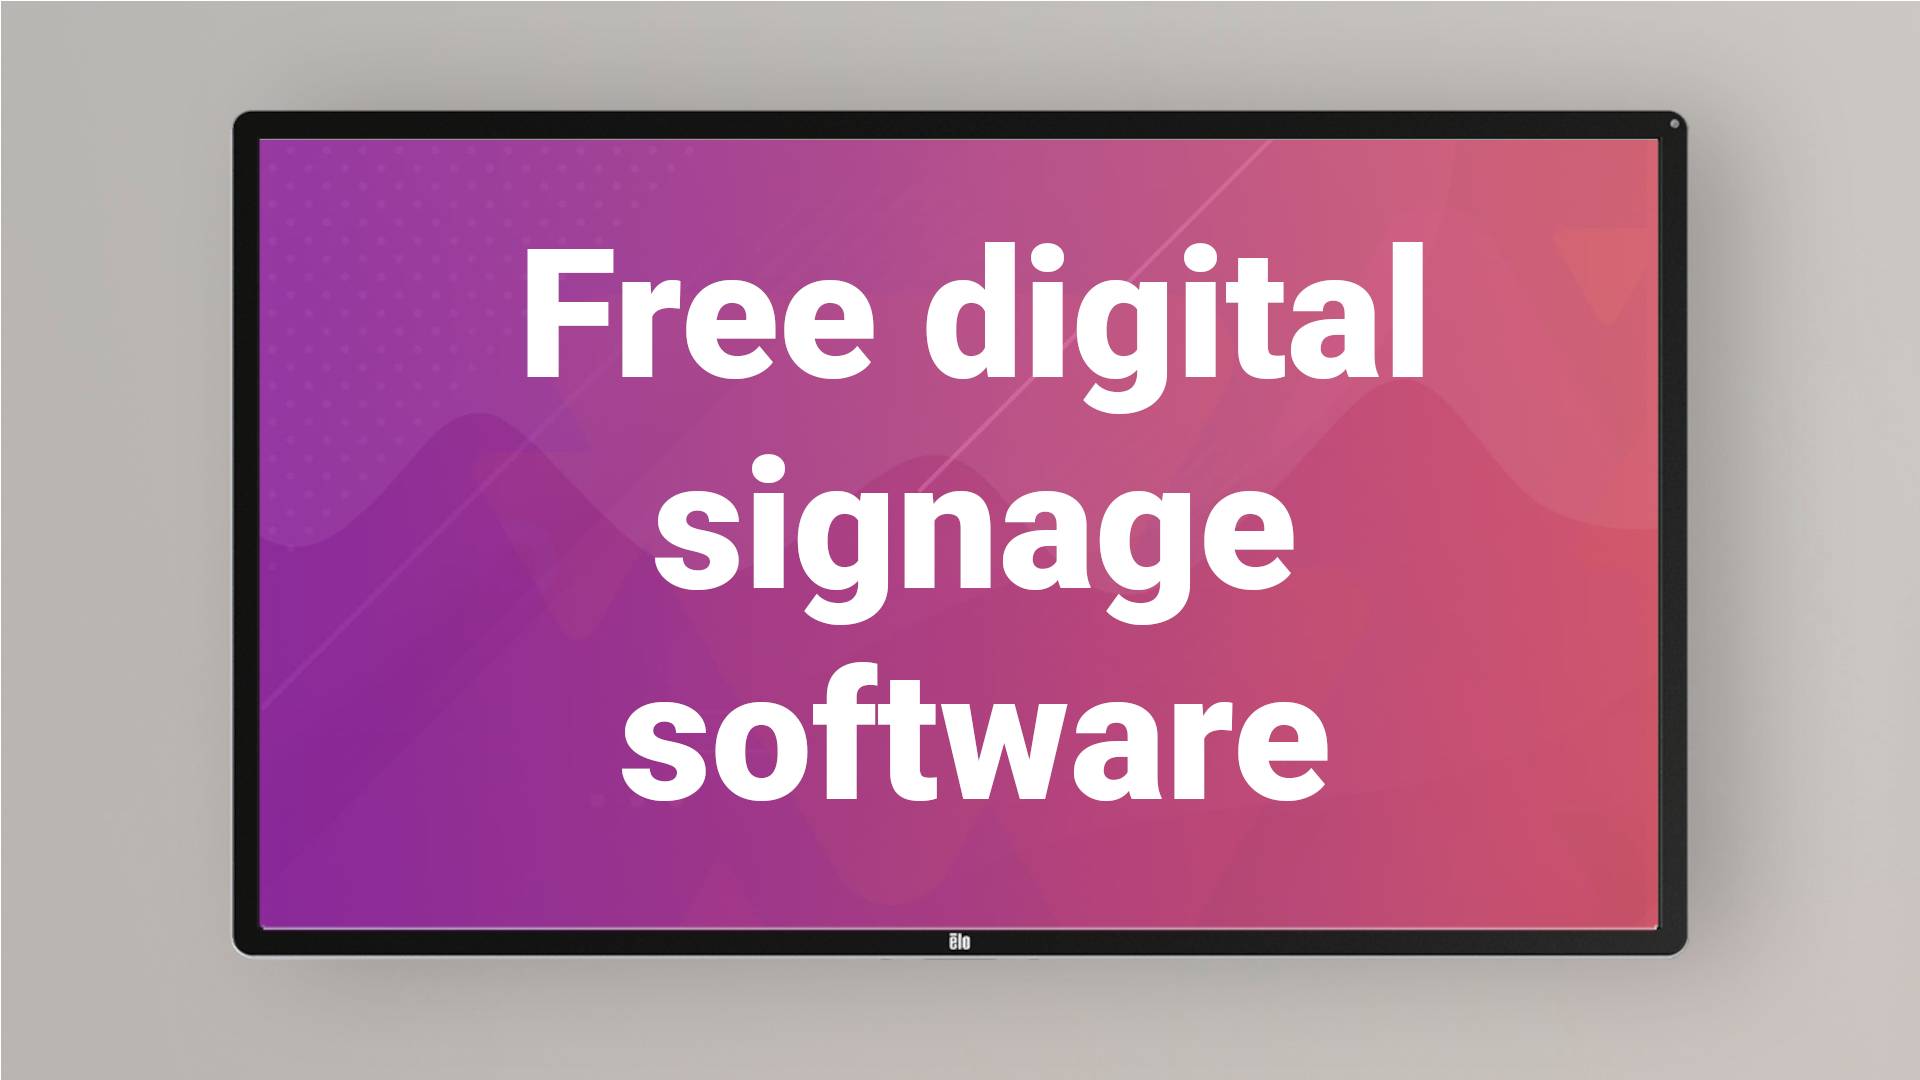 Free digital signage solution